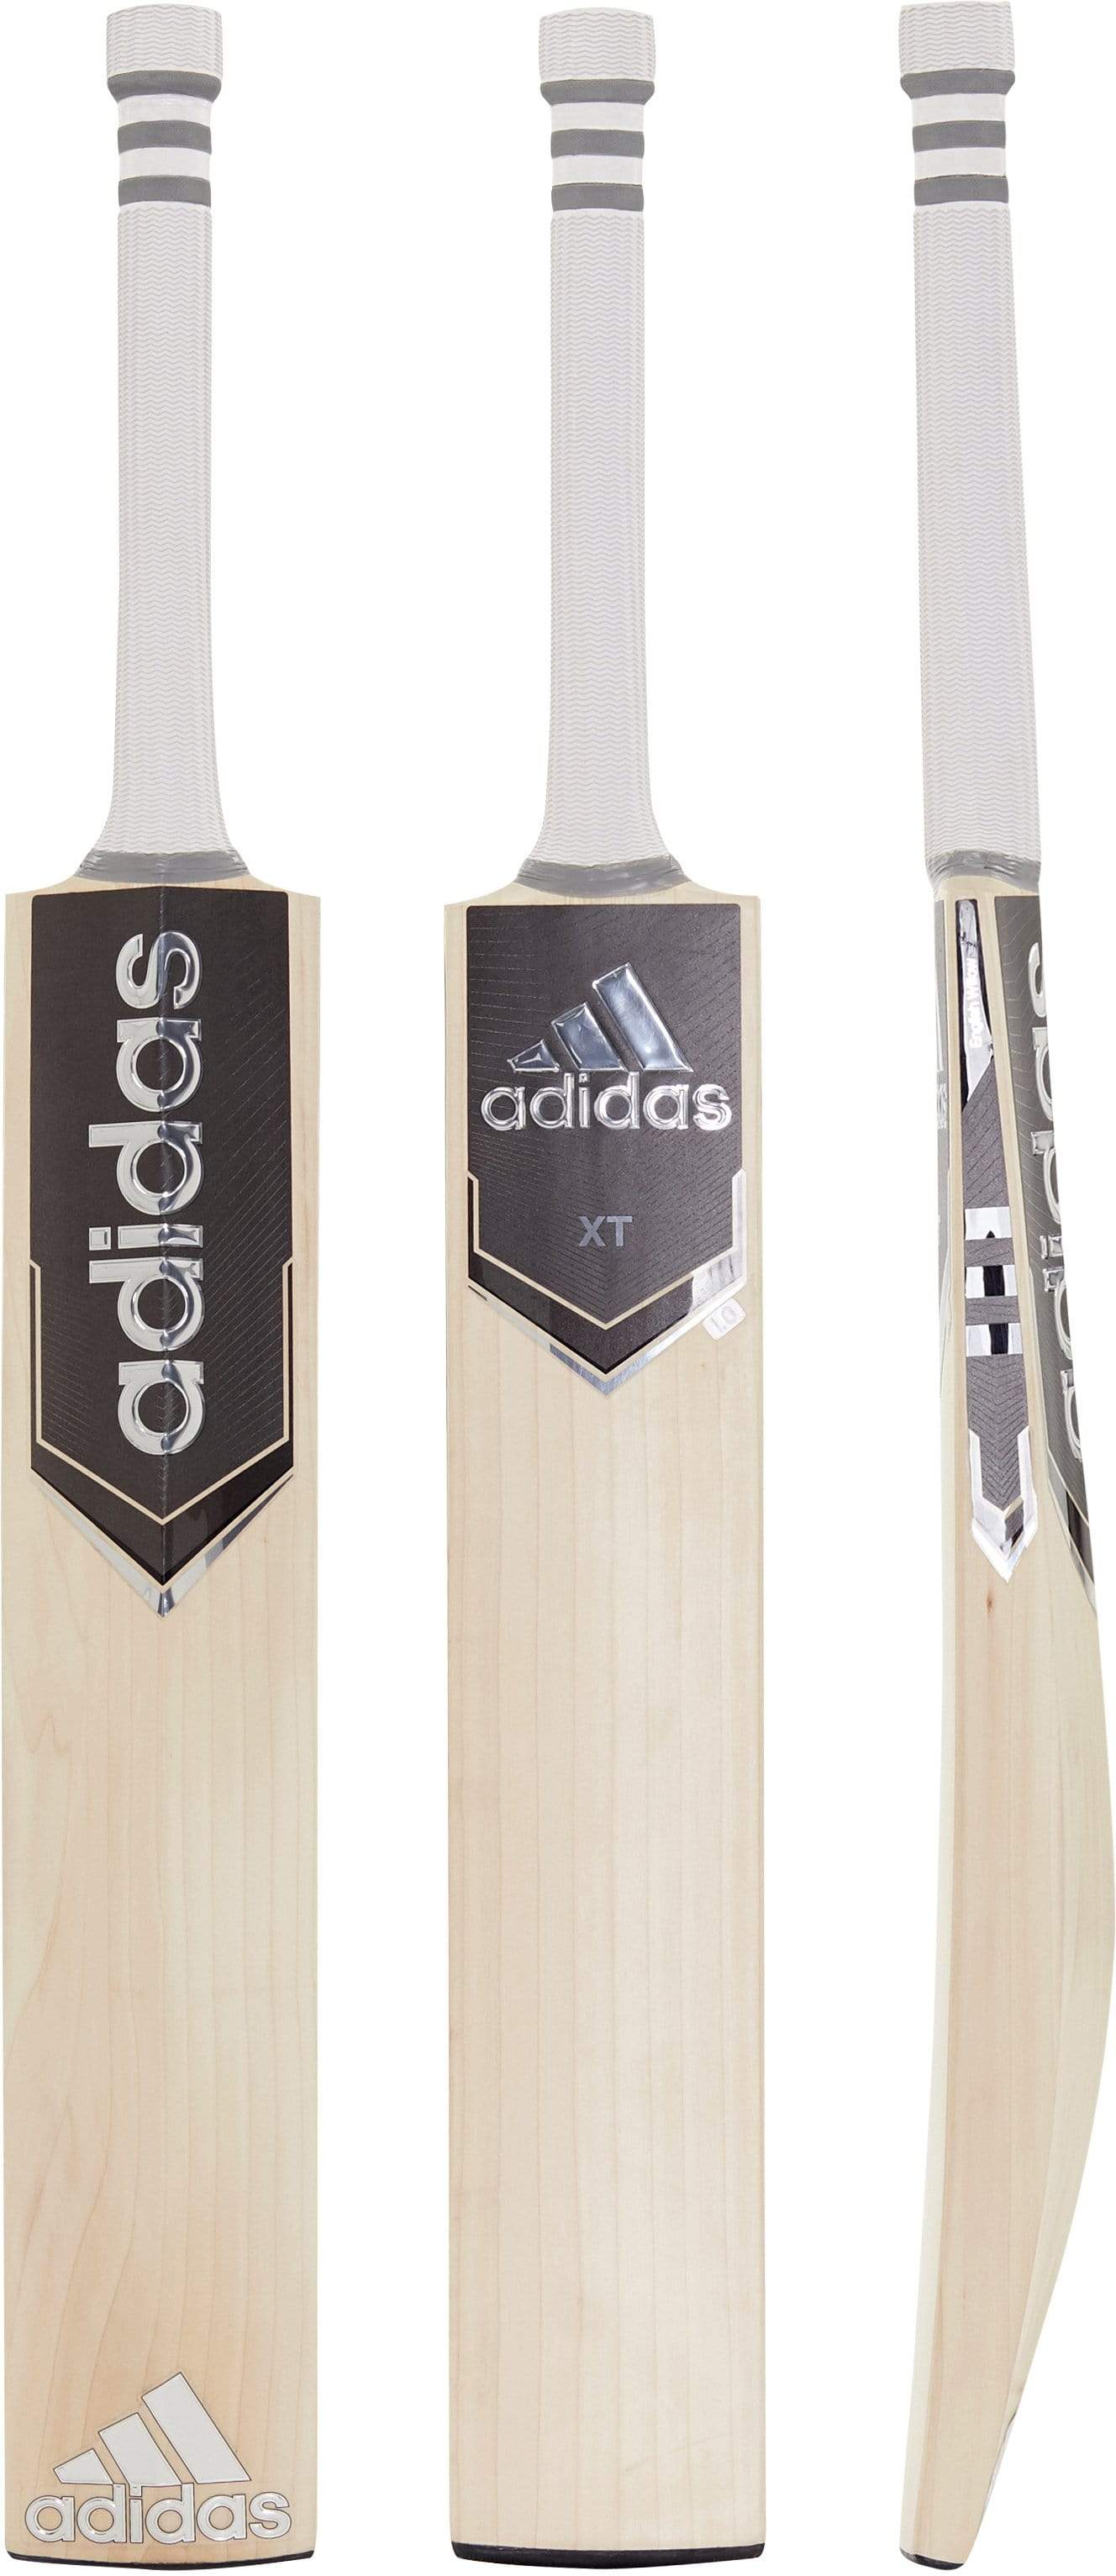 Adidas Cricket Bats SH / 2.7 Adidas Xt Grey 4.0 Senior Cricket Bat